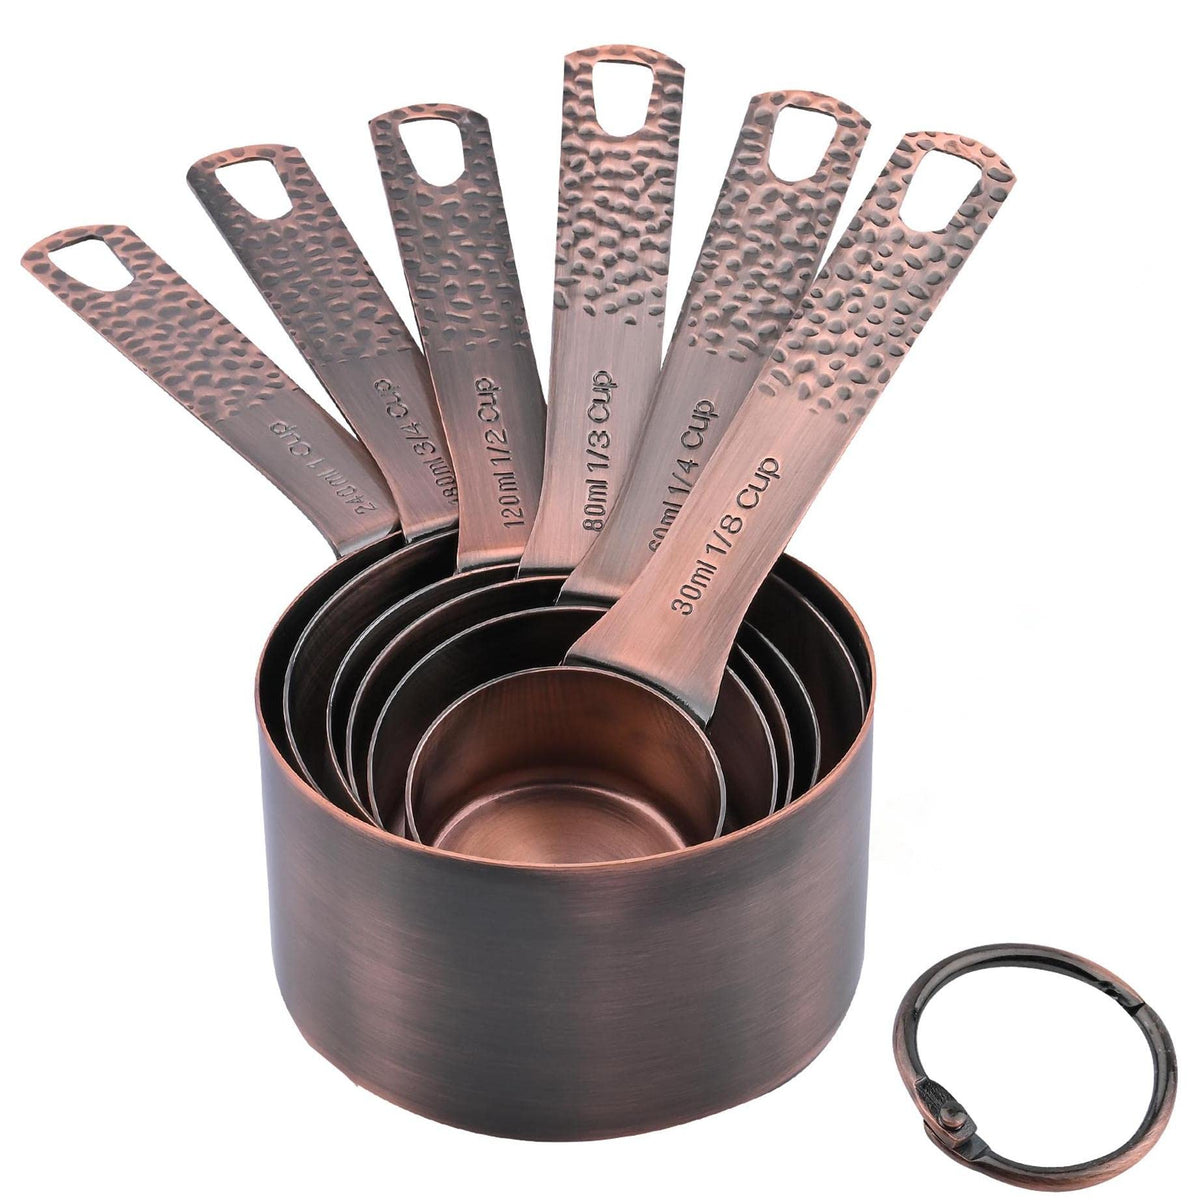 2/3 Cup Measuring Cup Stainless Steel Metal, Accurate, Engraved Markings Us  